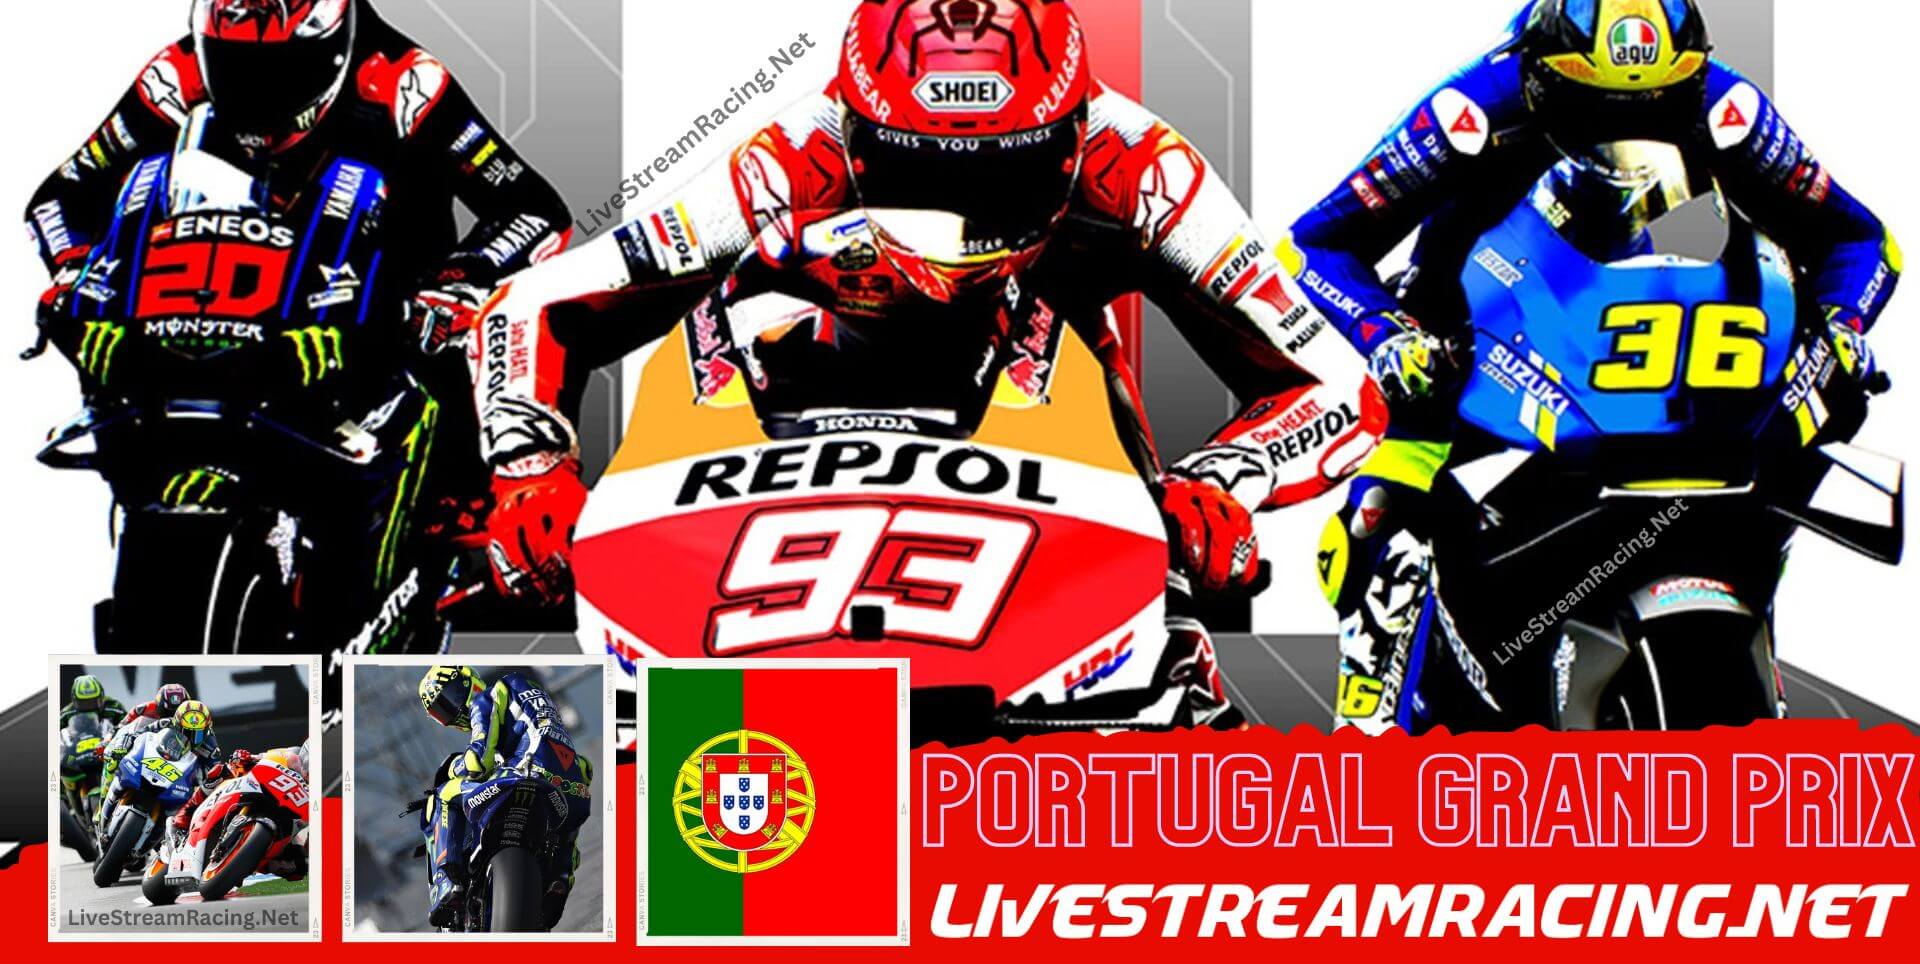 Portugal Grand Prix MotoGP Live Online Stream